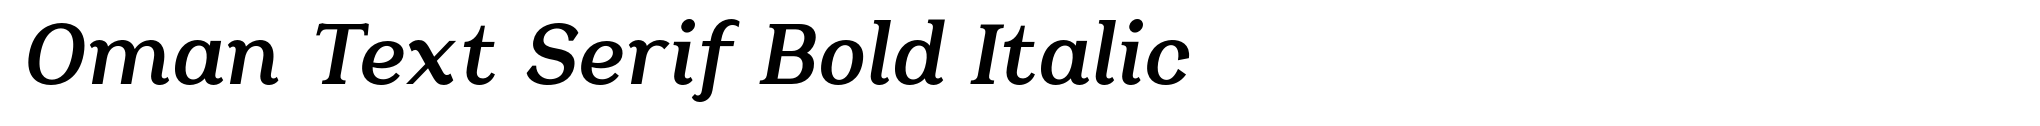 Oman Text Serif Bold Italic image